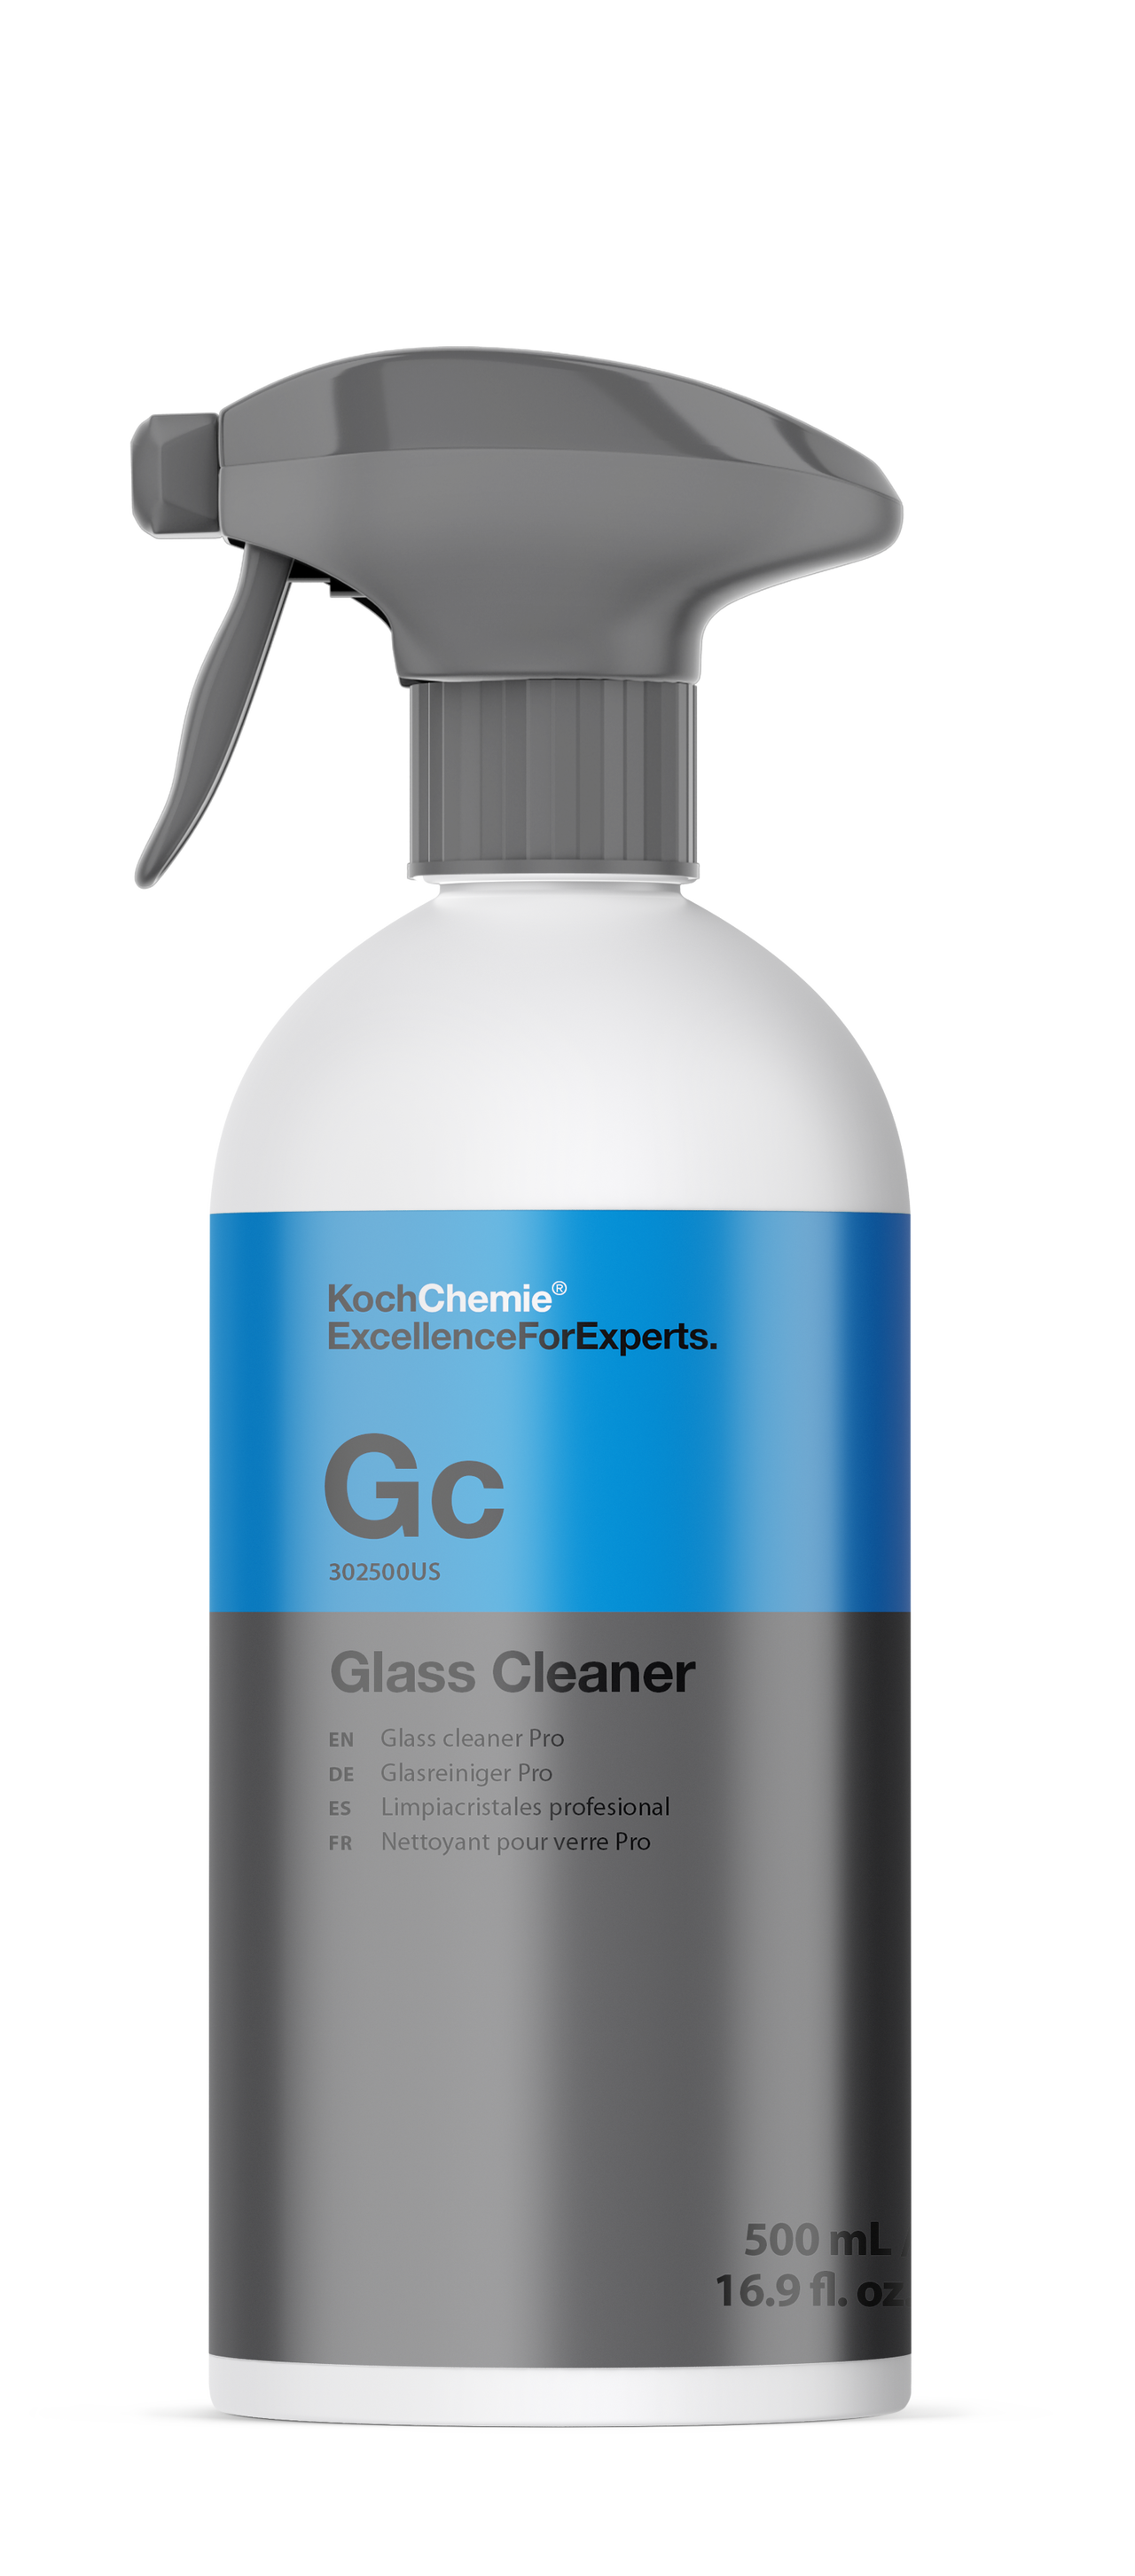 SONAX Glass Cleaner - 750ml